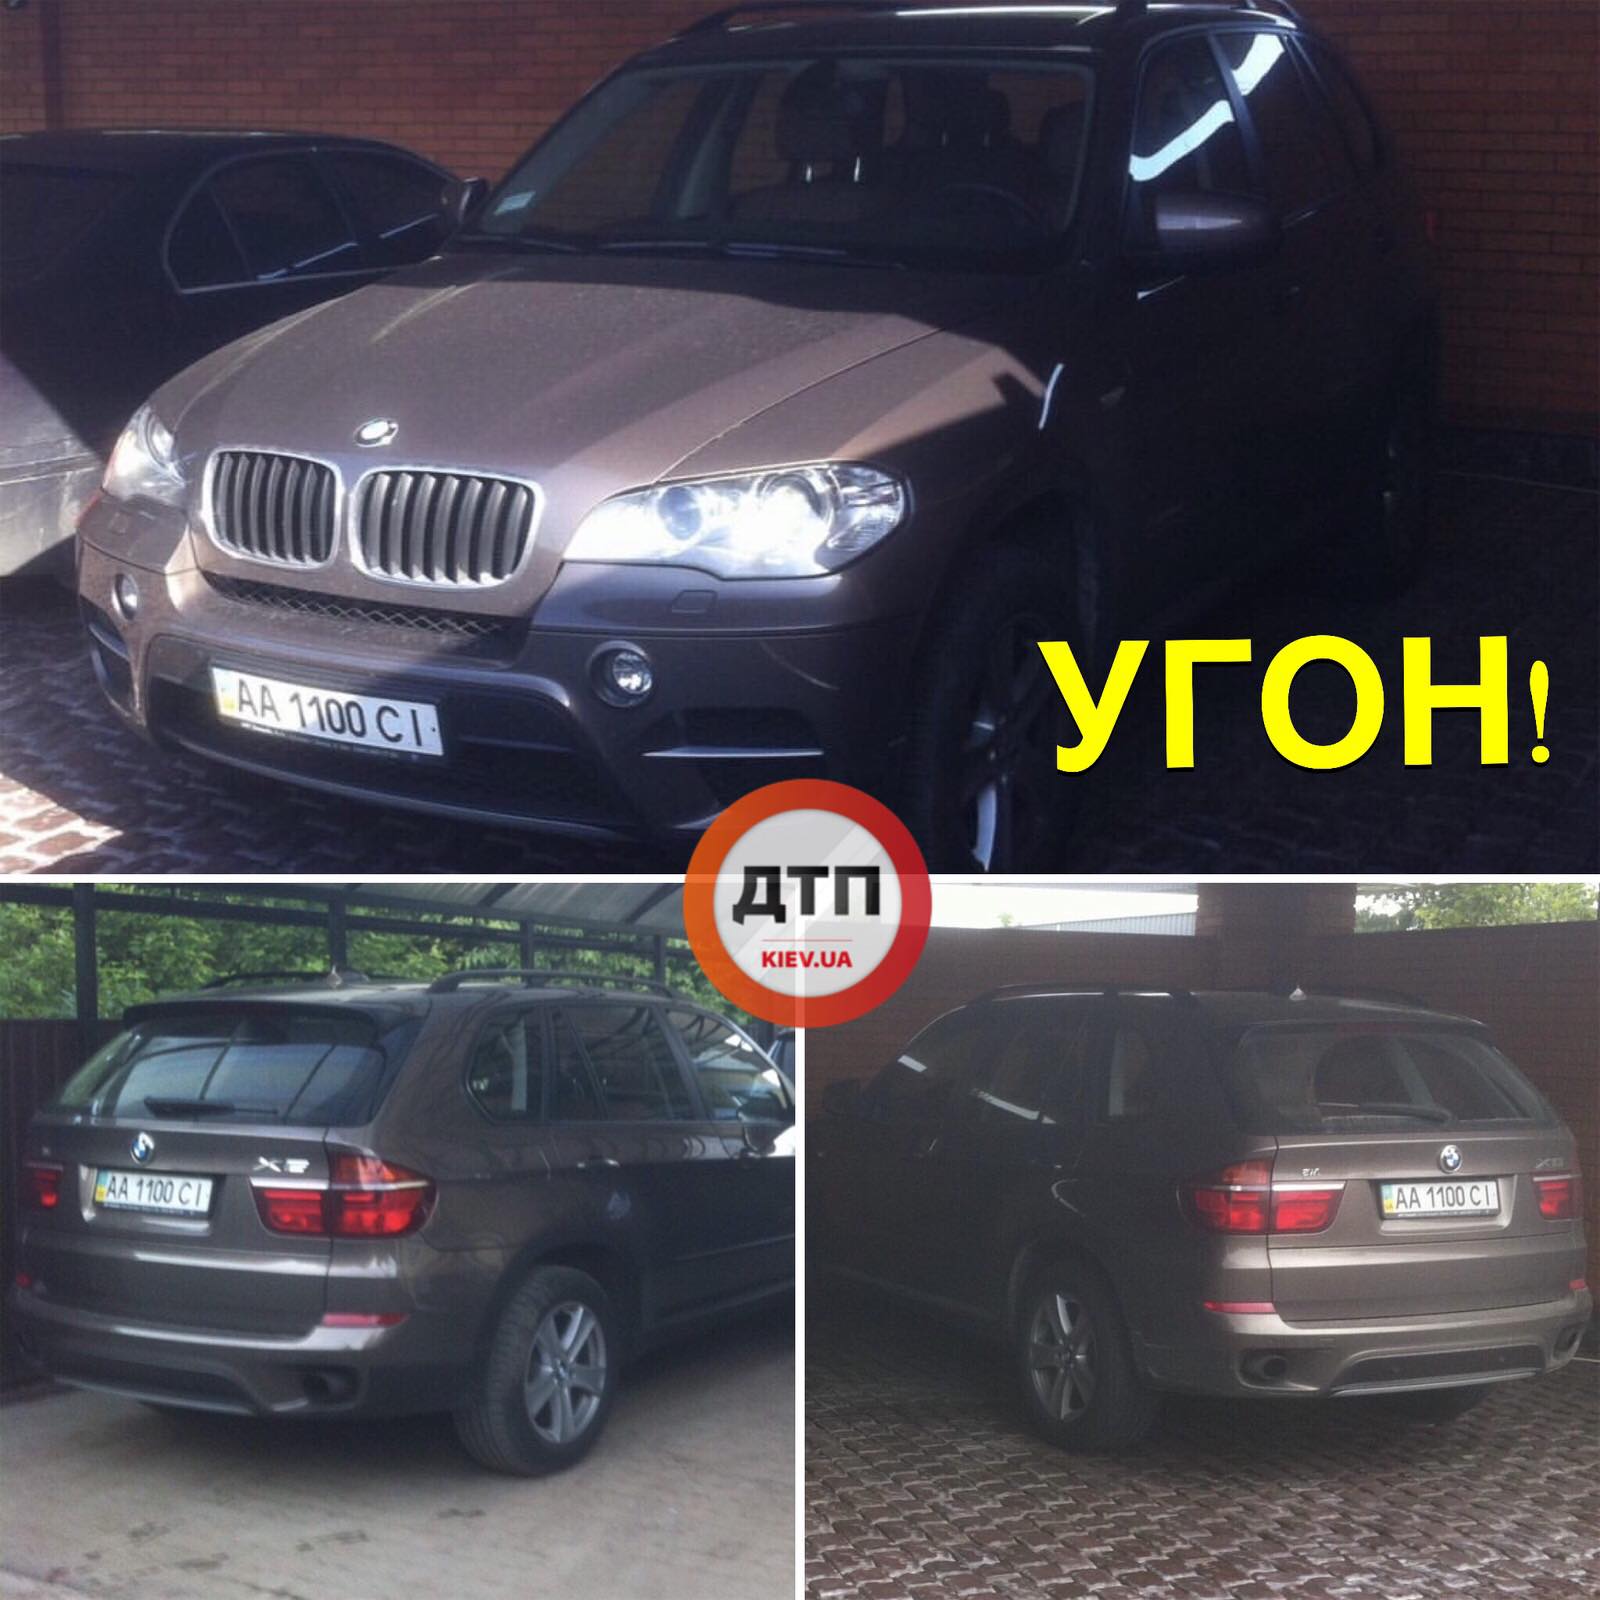 В Печерском районе столицы был угнан автомобиль BMW X5 (АА1100СІ)